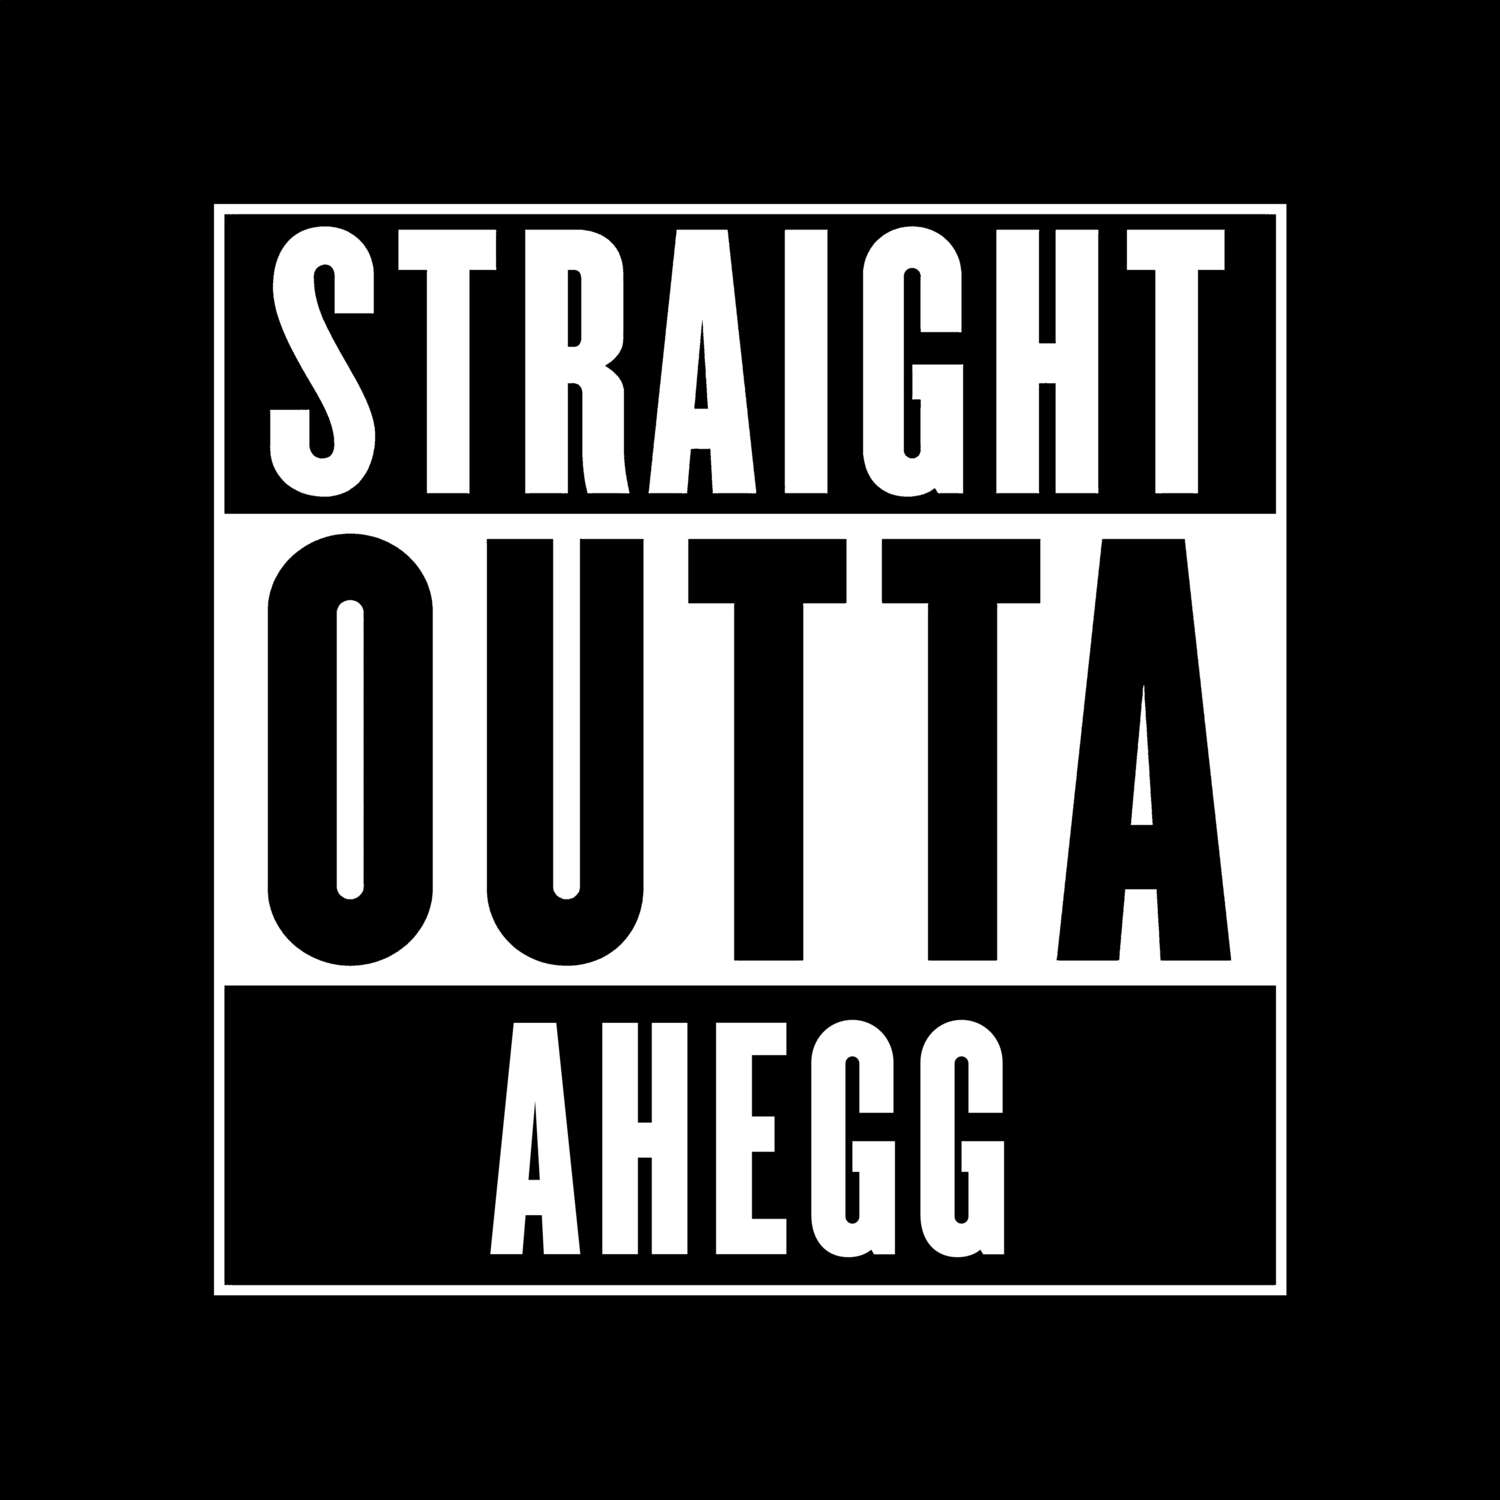 Ahegg T-Shirt »Straight Outta«